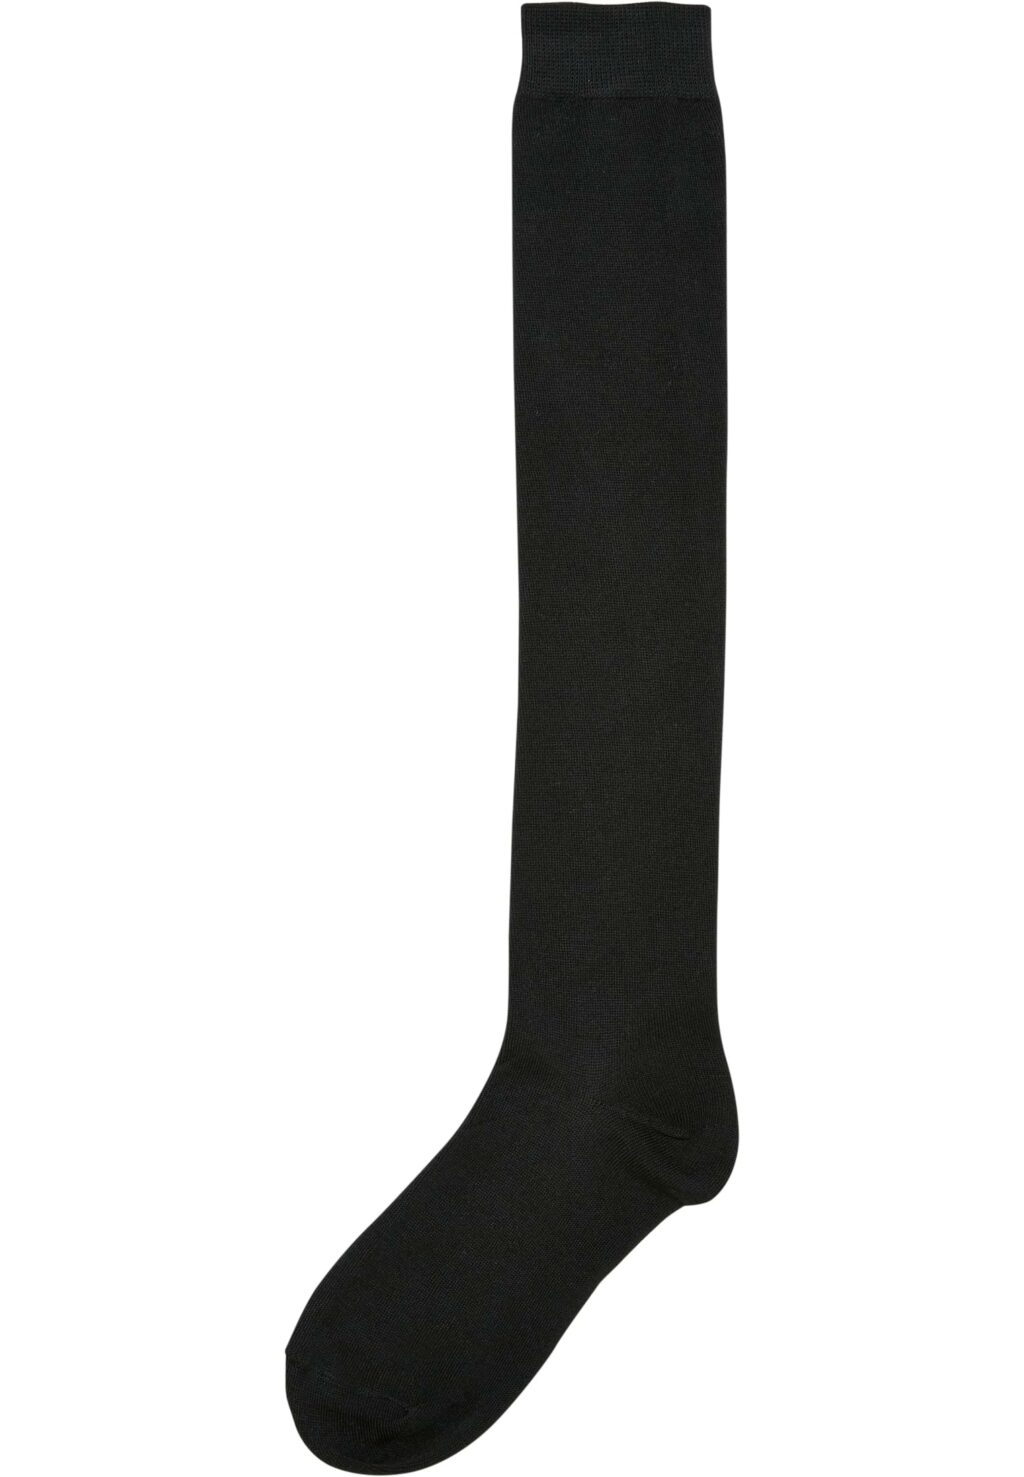 Ladies College Socks 2-Pack black/jasper TB4641